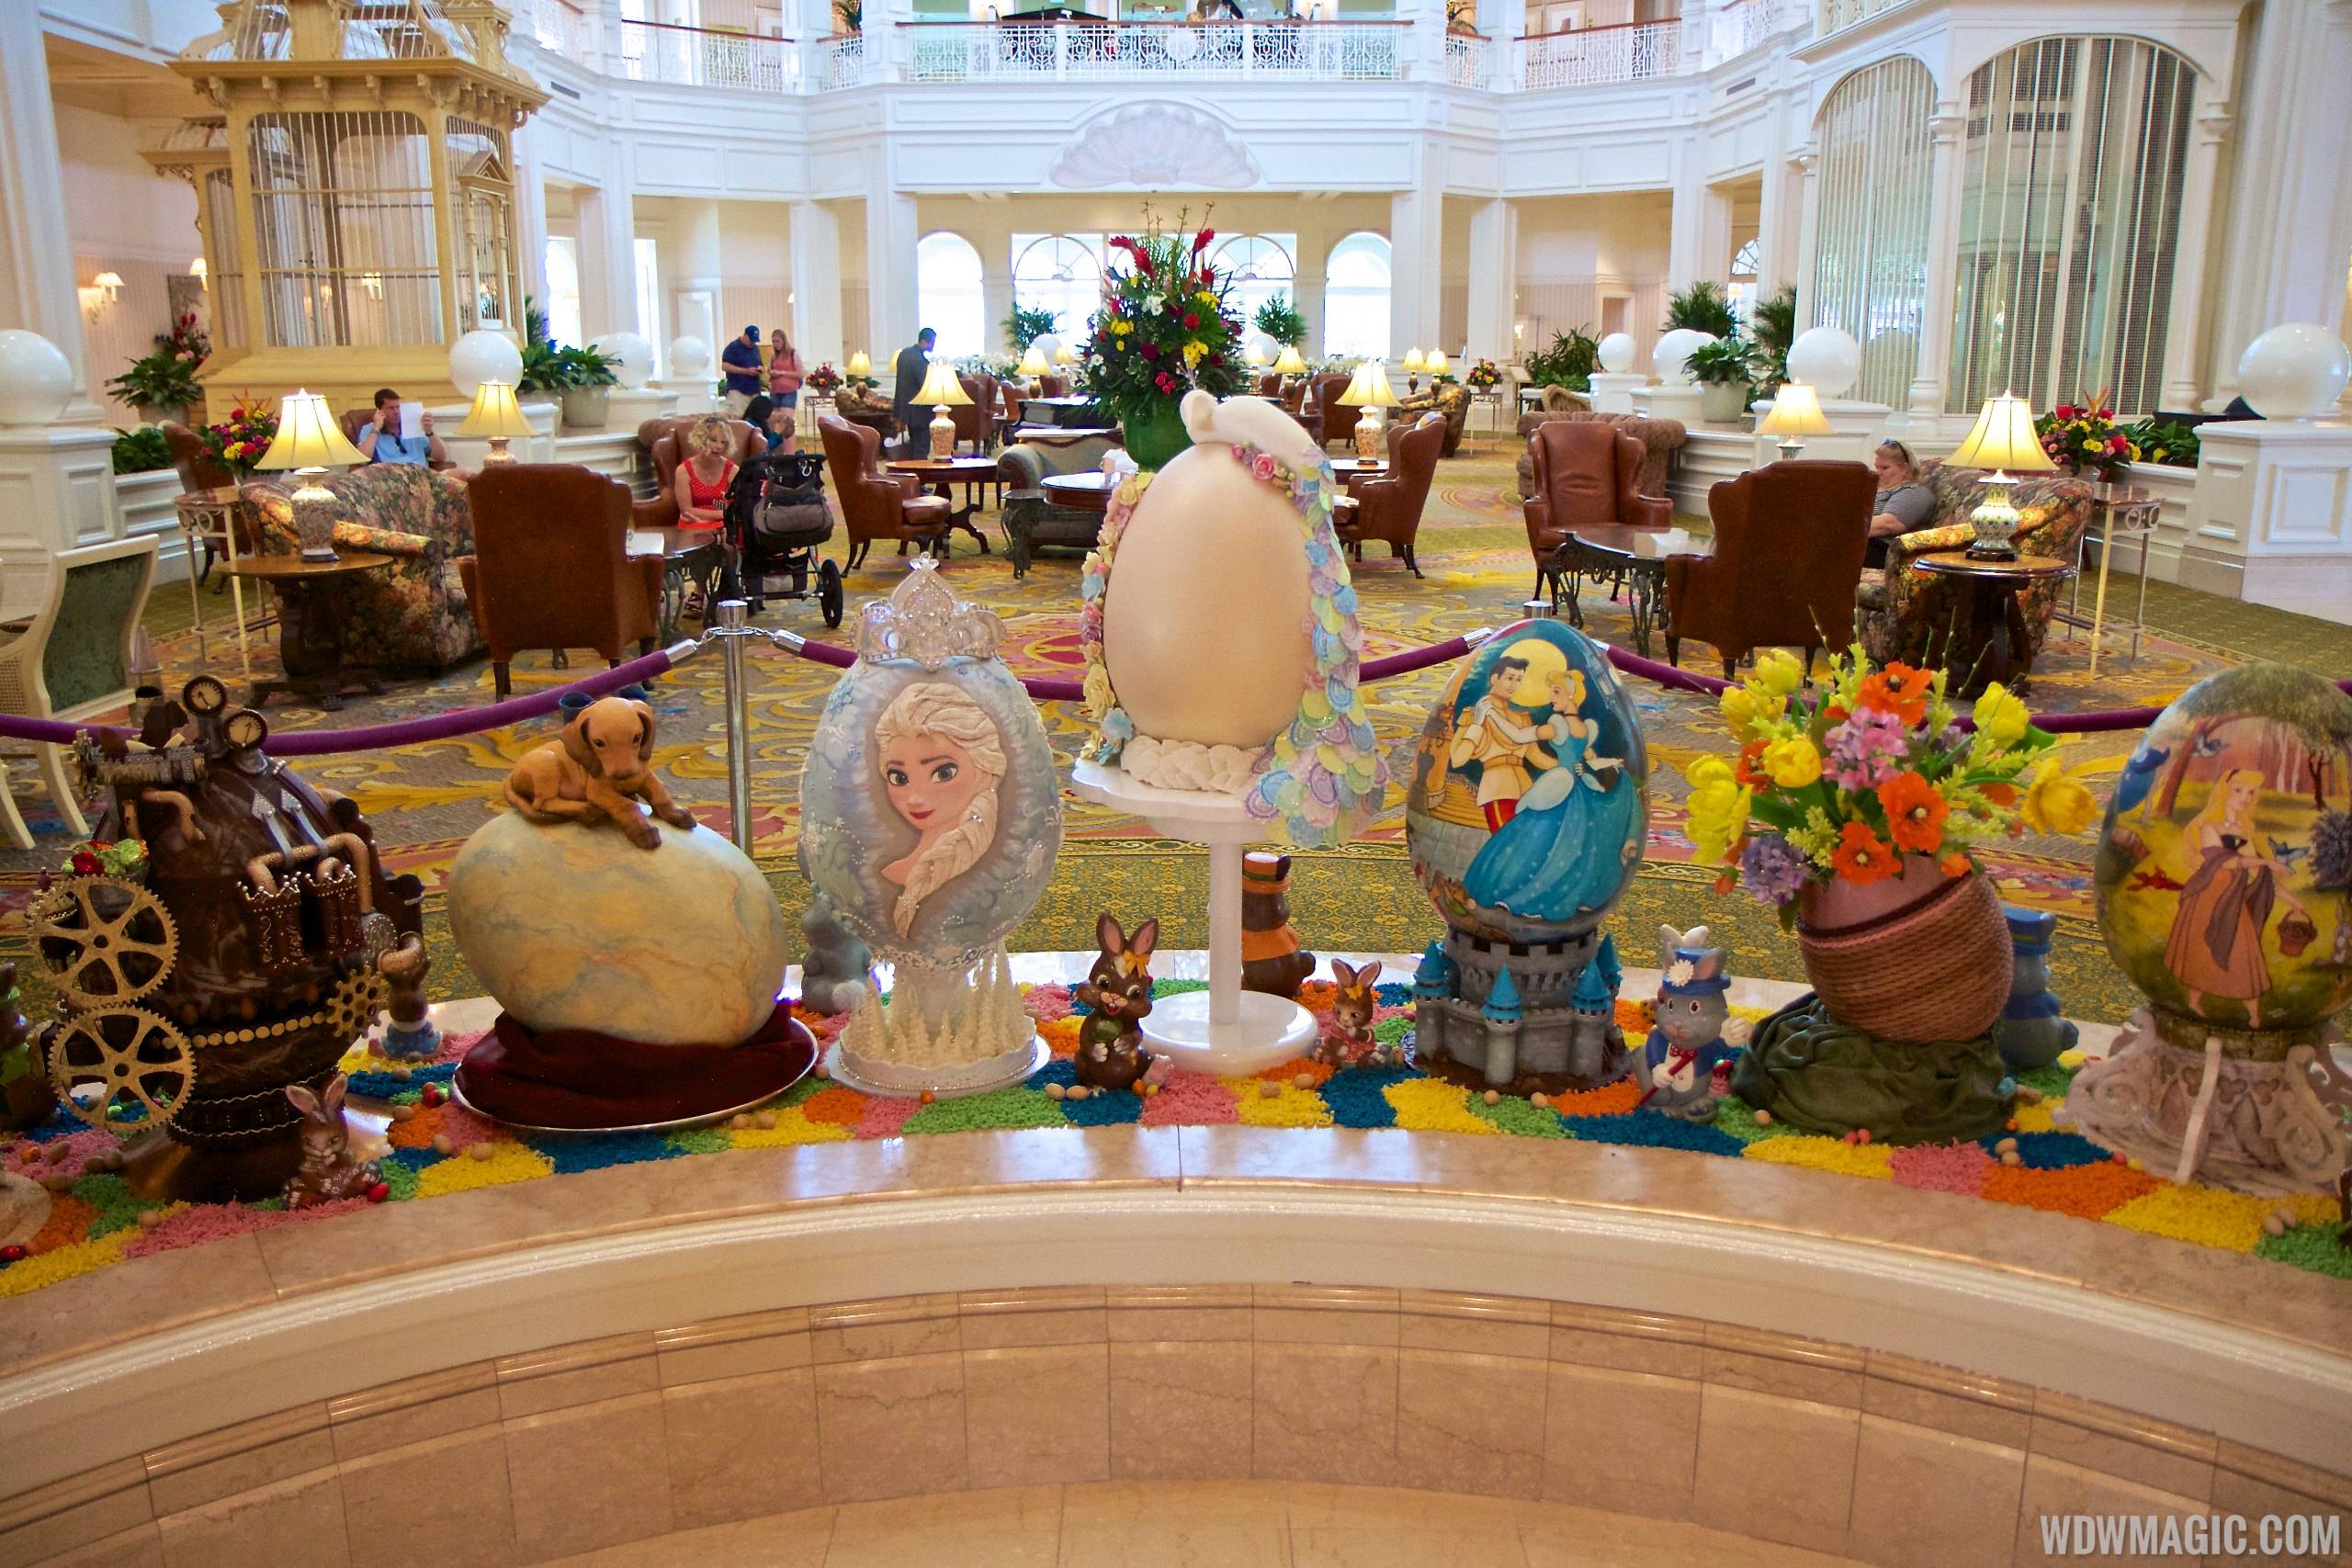 Grand Floridian Resort Easter Egg display